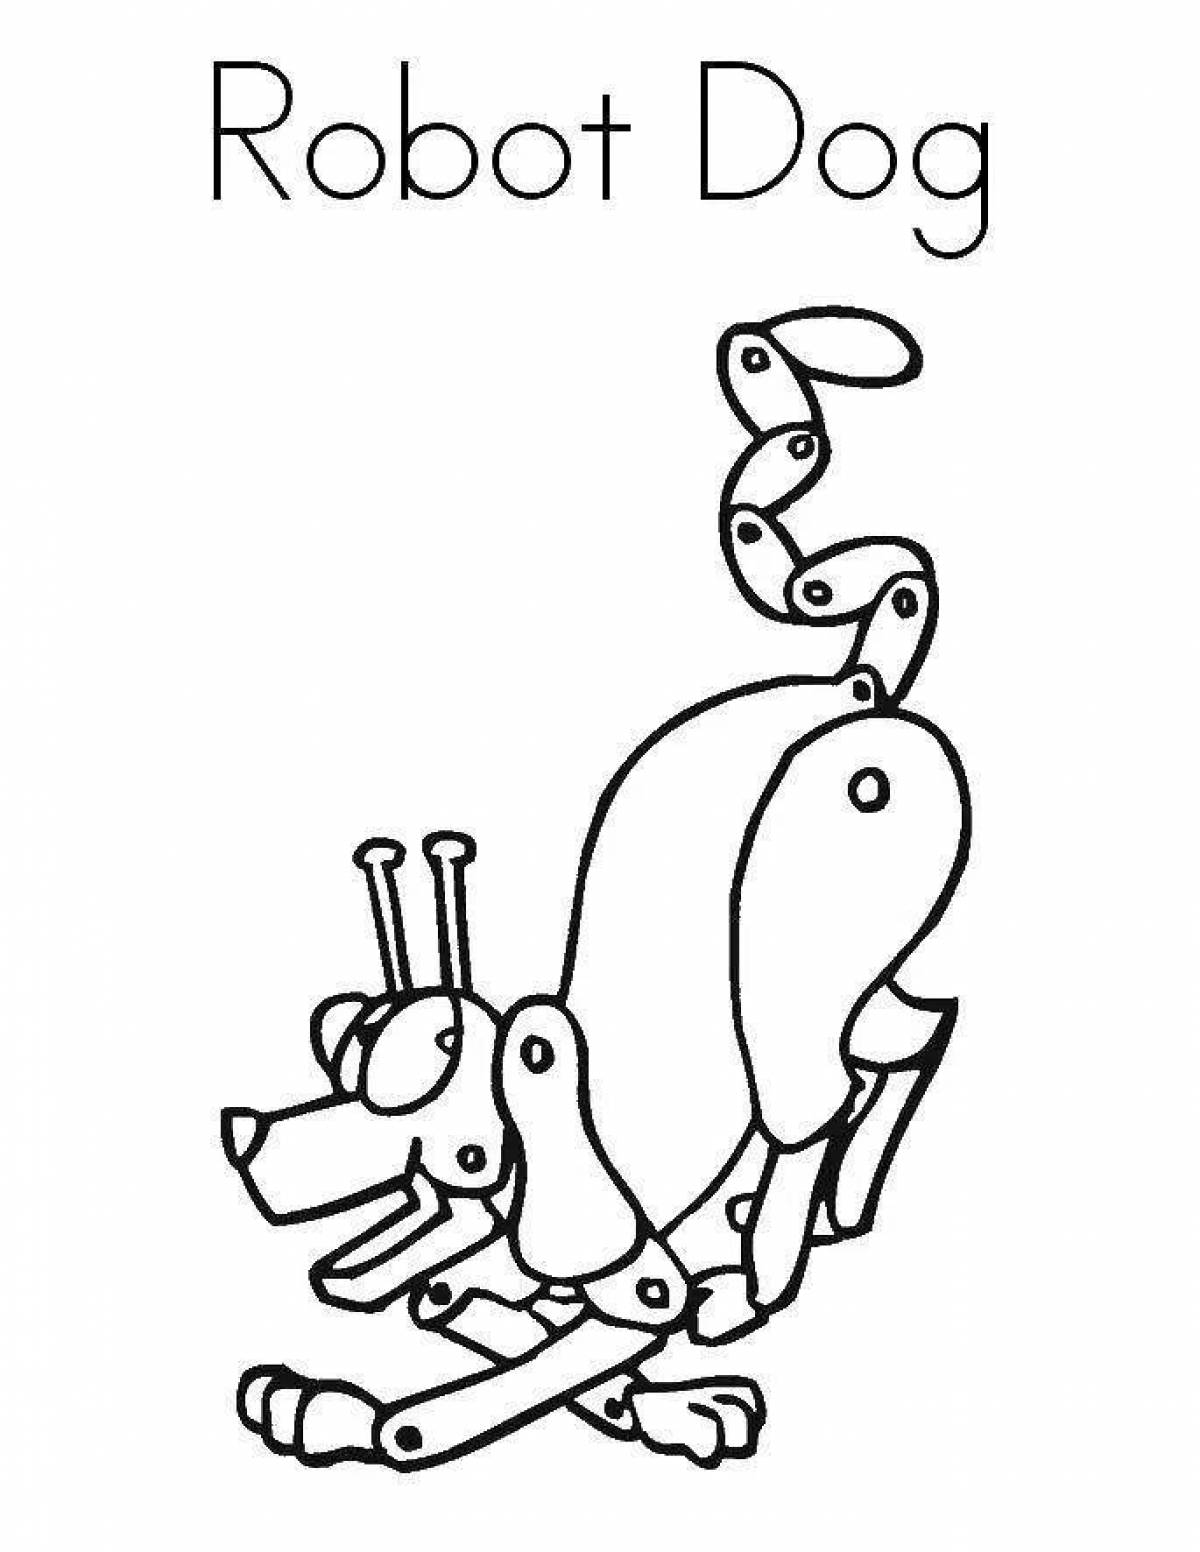 Robot dog #12